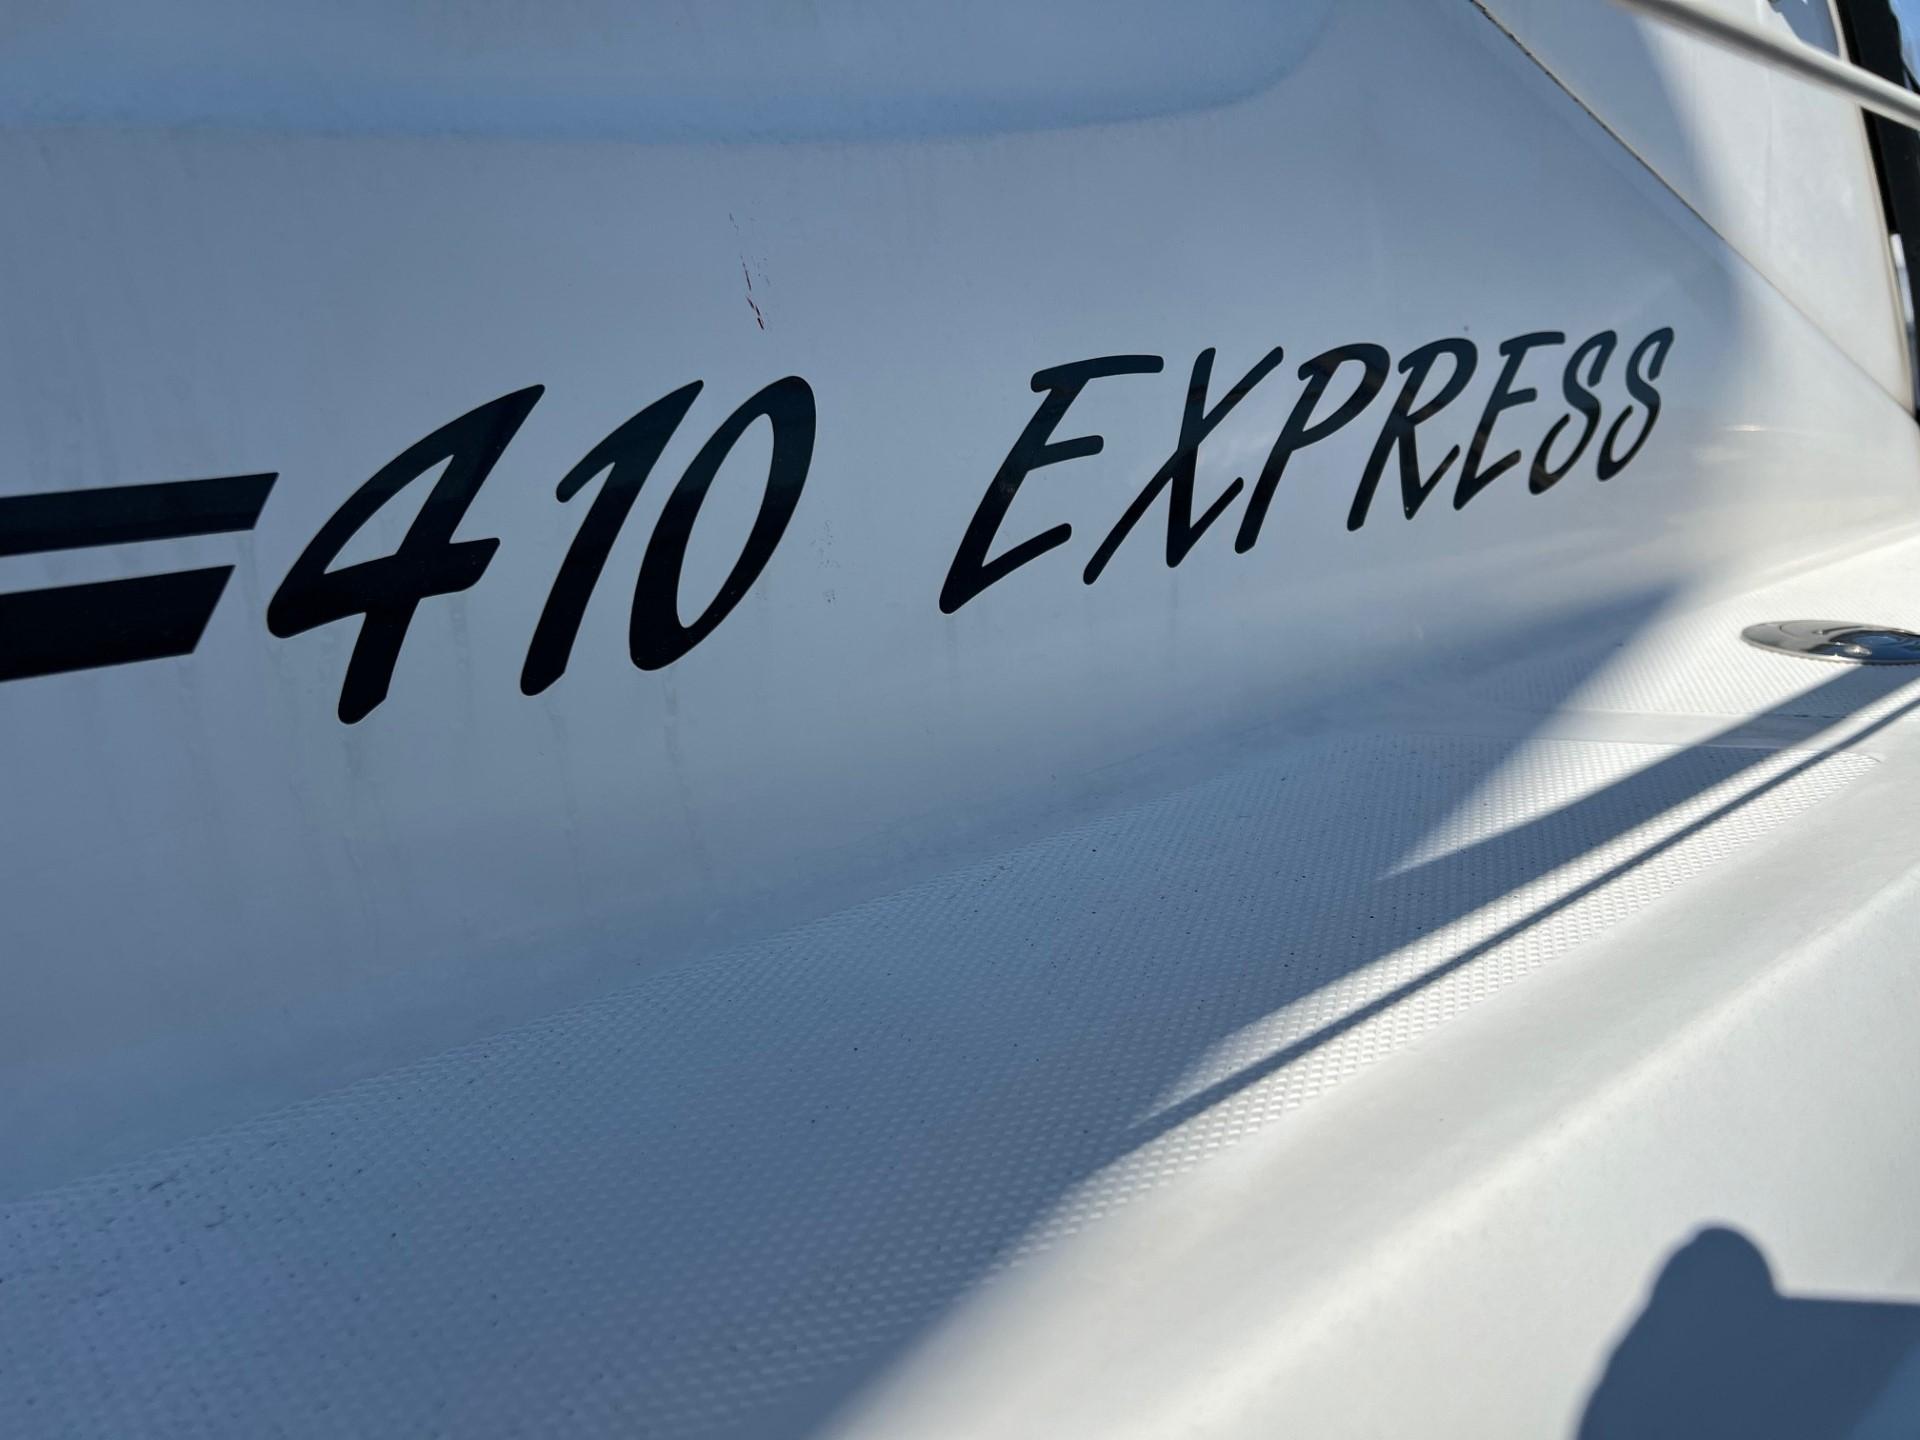 Sea Ray 410 Express Cruiser